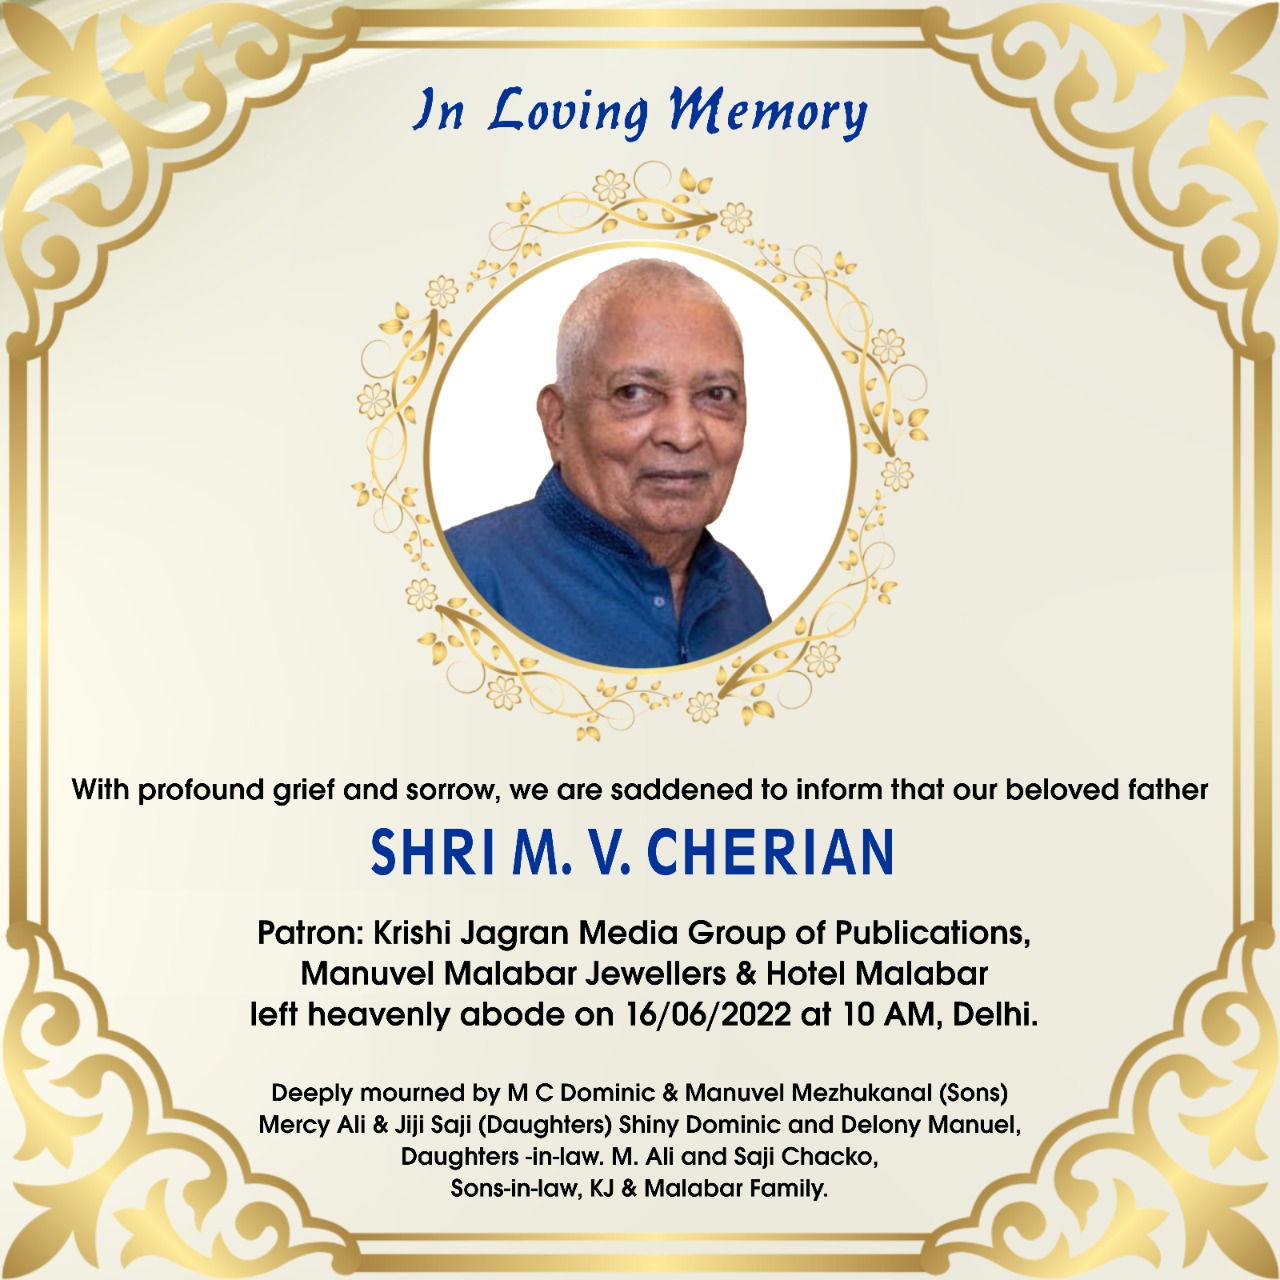 Condolence News: Shri MV Cherian, the revered father of MC Dominic, chief editor of Krishi Jagran, passed away